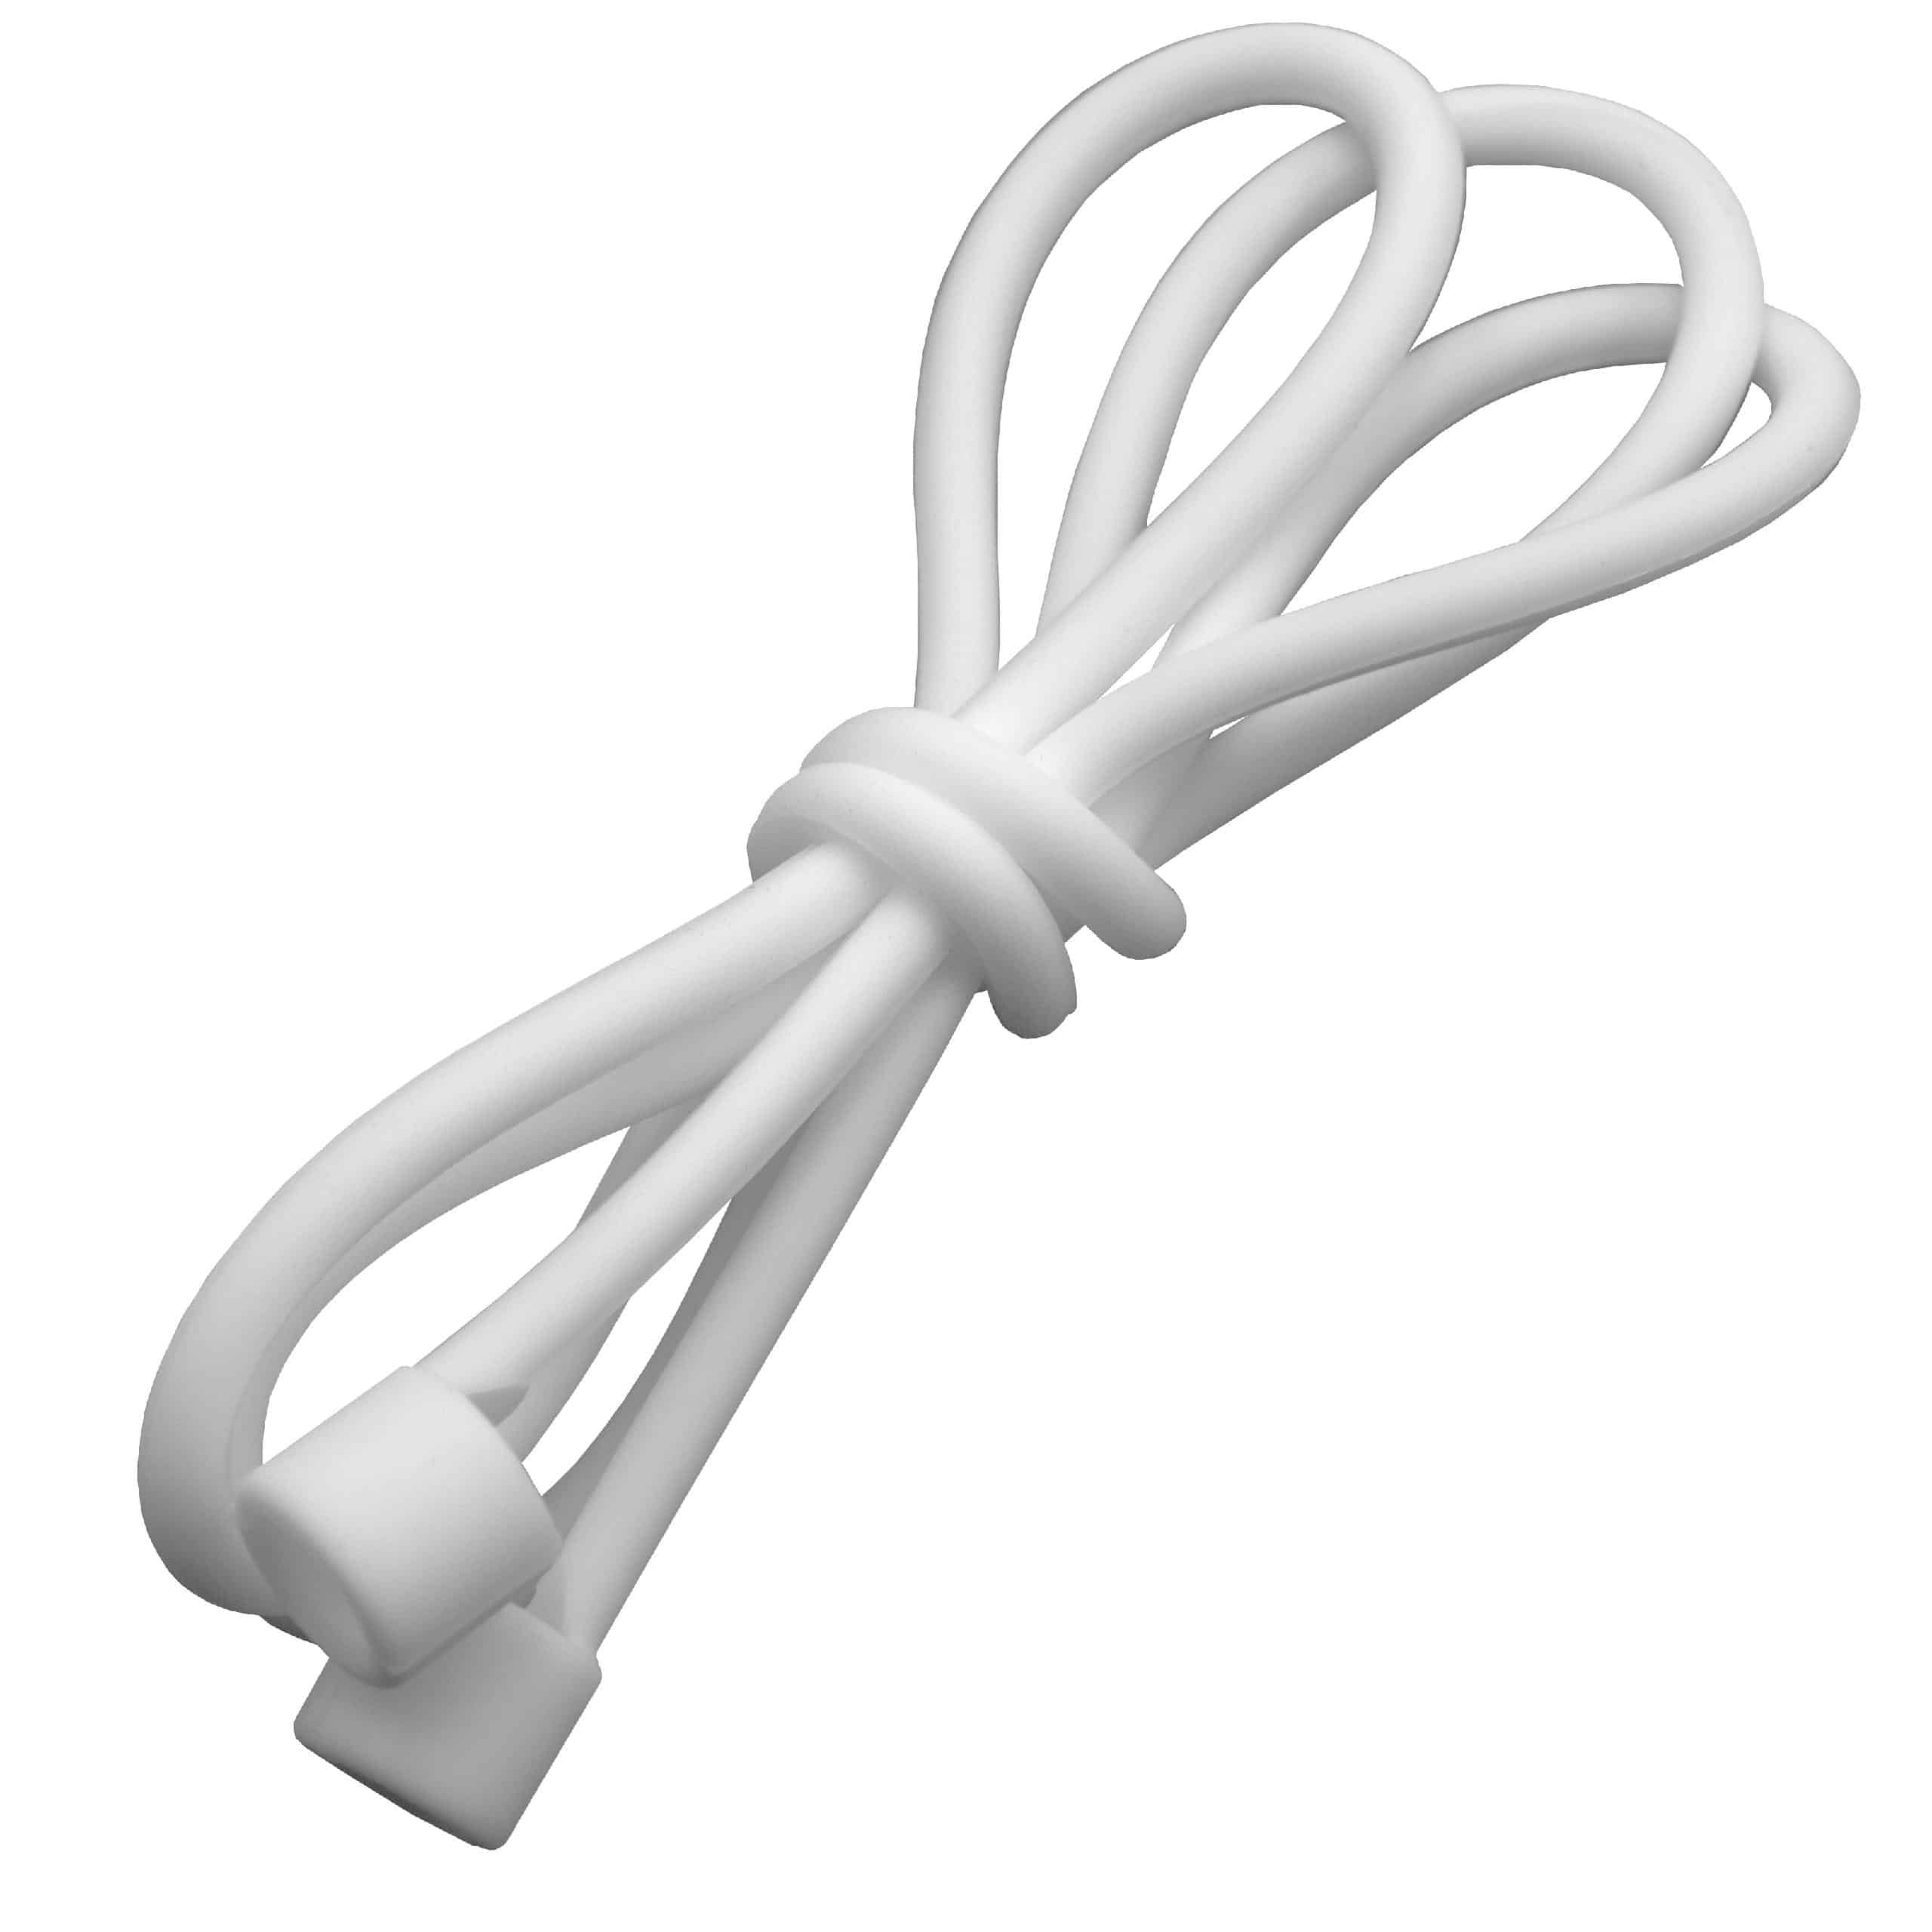 vhbw Kopfhörer Halteband kabellose Kopfhörer - Anti-lost Strap, Silikon, 55 cm Weiß